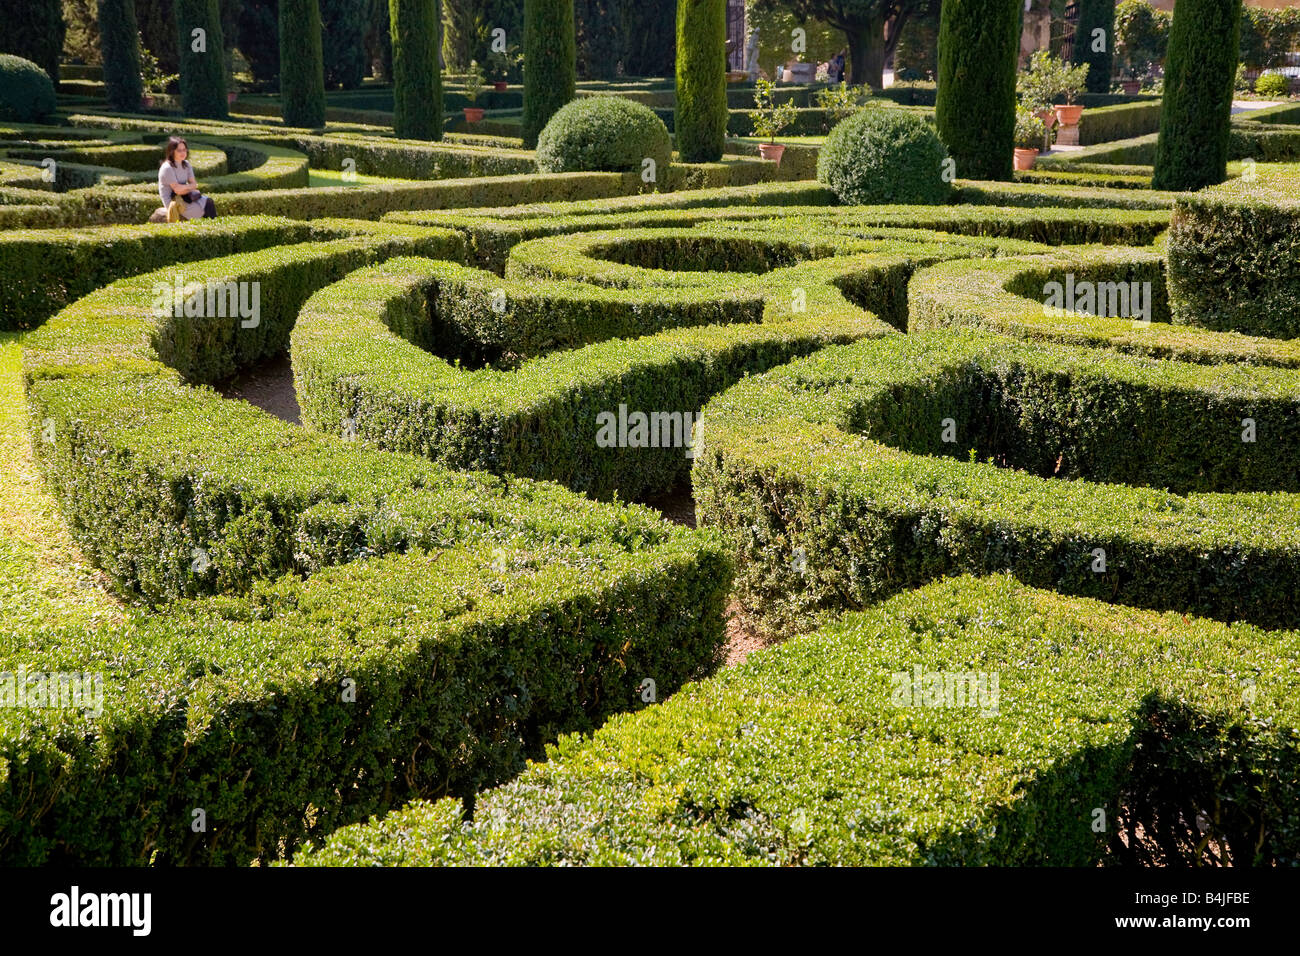 Giardino Giusti gardens Verona Italy Stock Photo